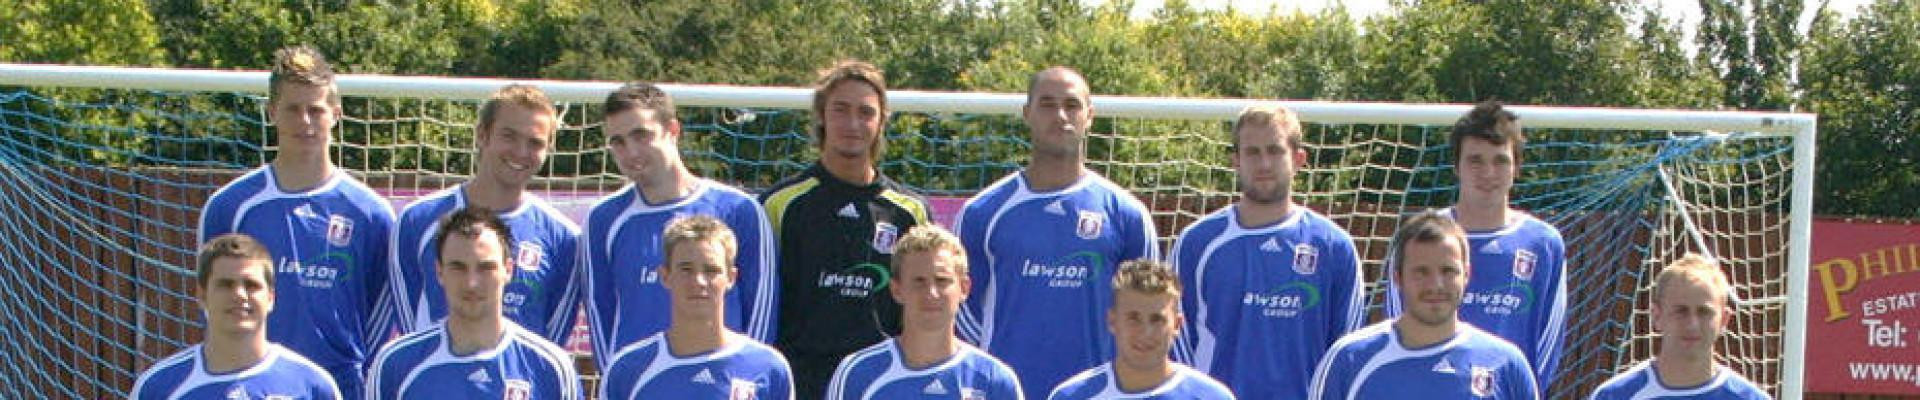 Team Photo 2007/08 Season